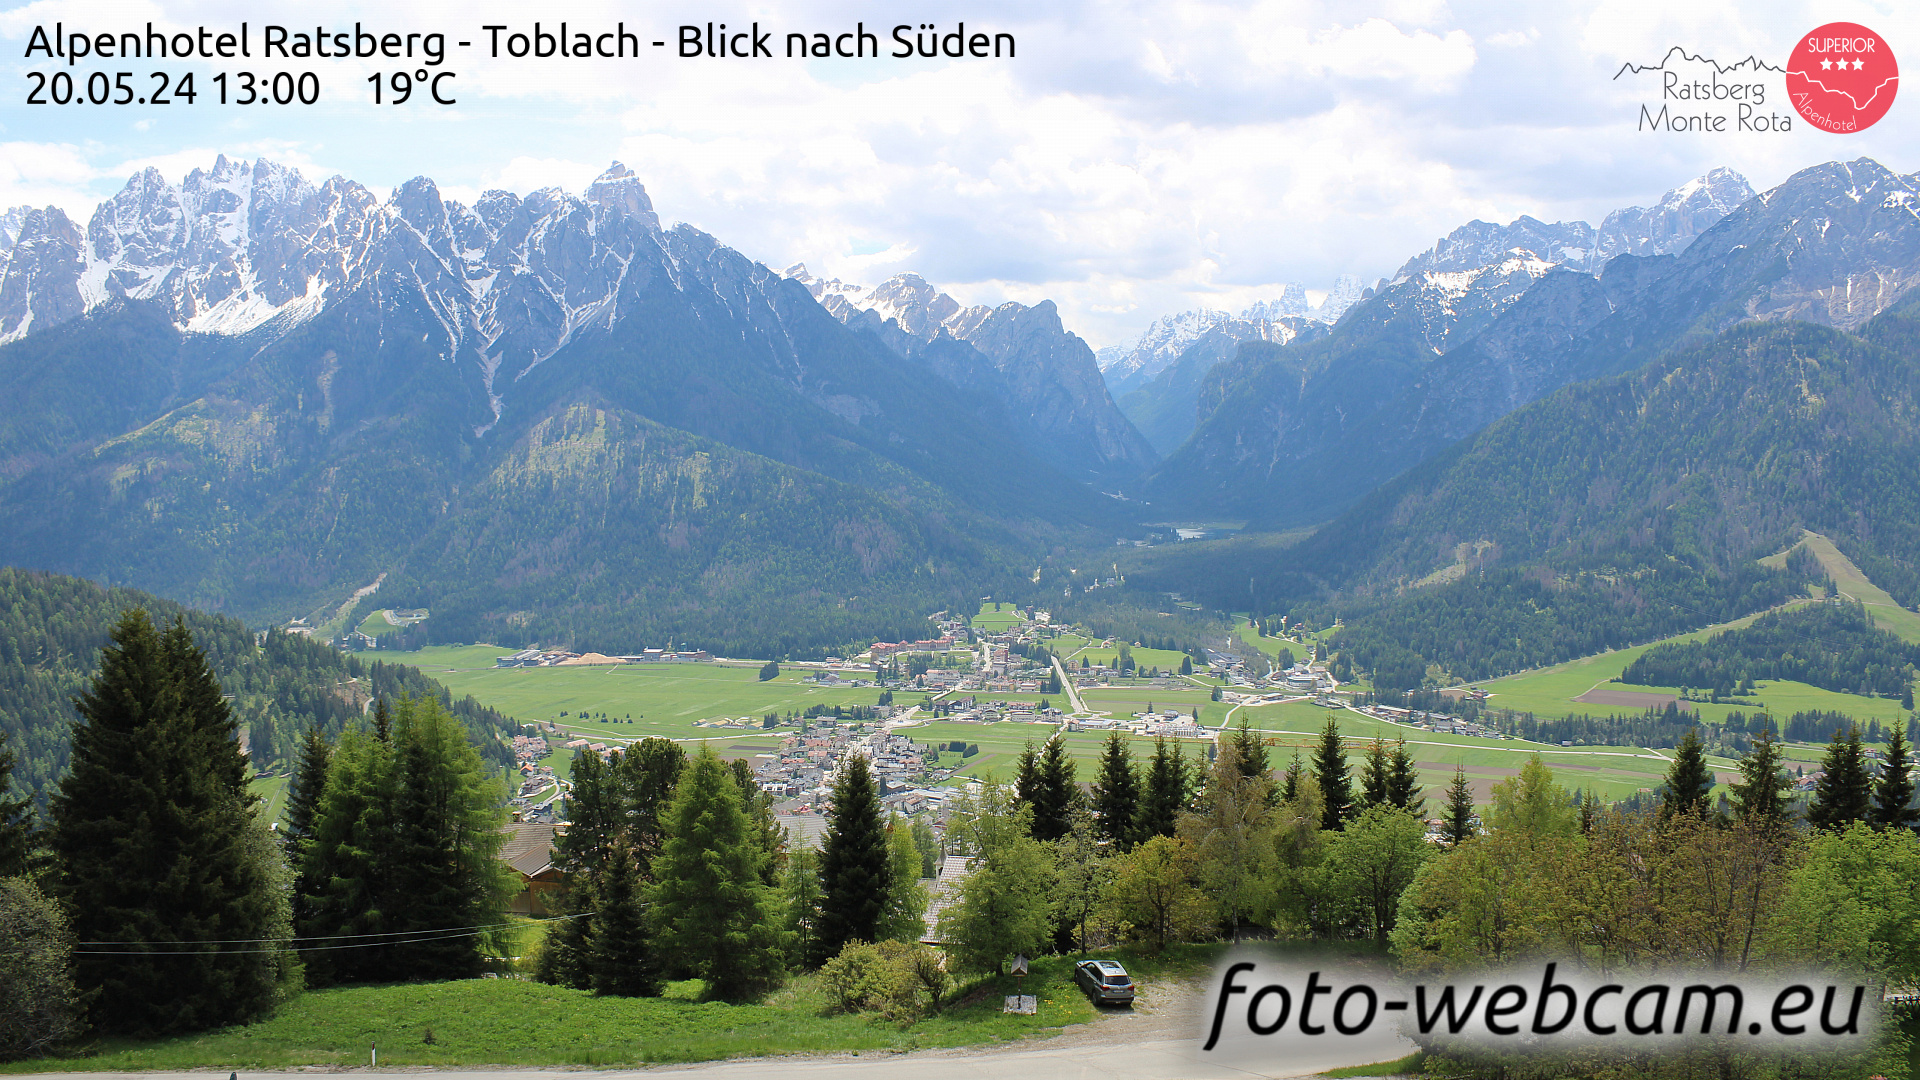 Toblach (Dolomitas) Dom. 13:03